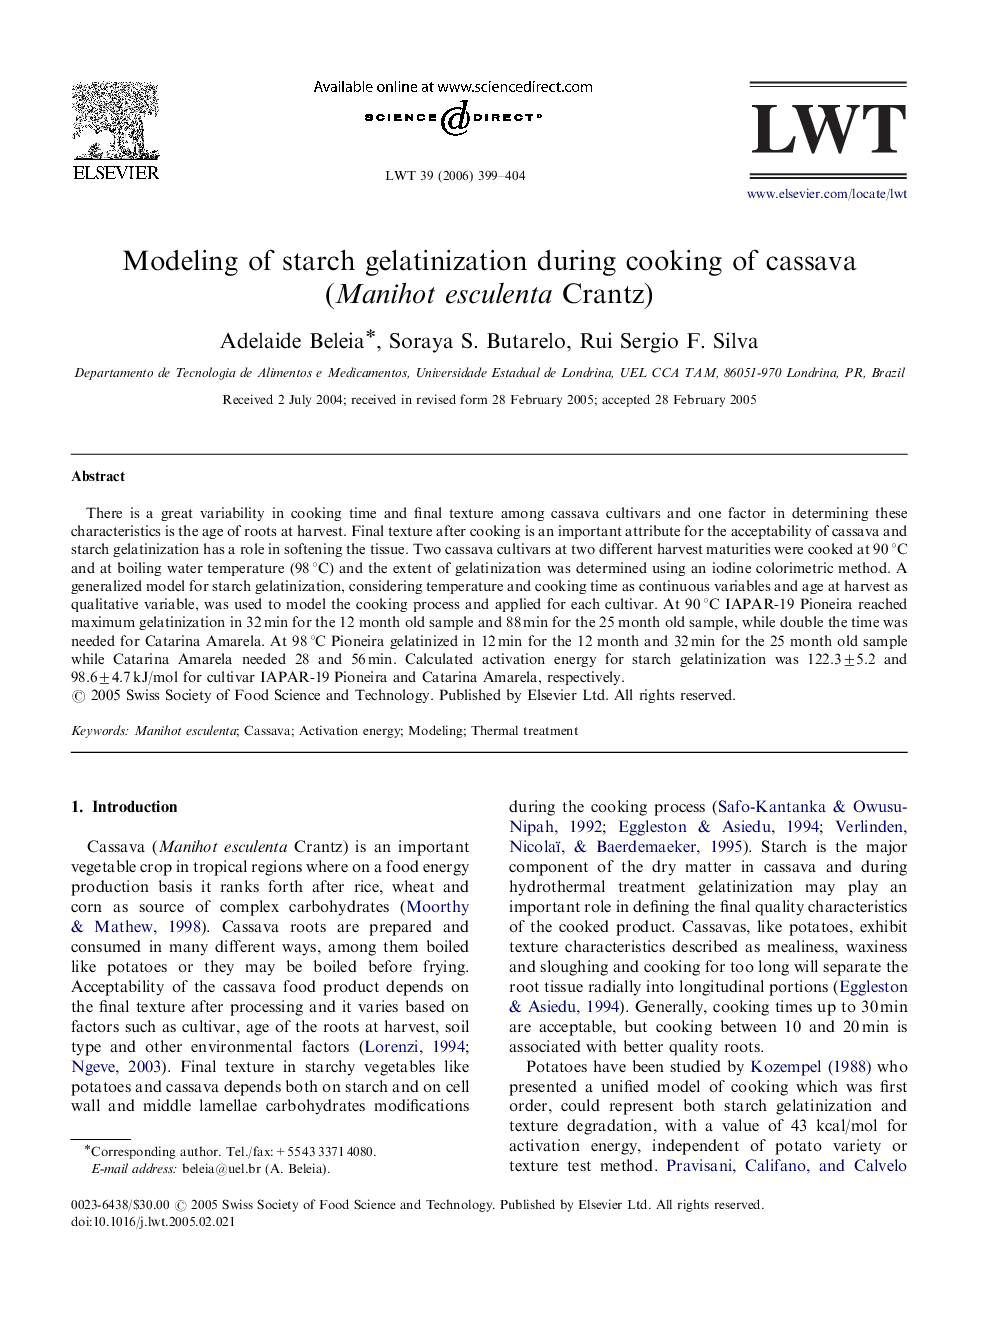 Modeling of starch gelatinization during cooking of cassava (Manihot esculenta Crantz)